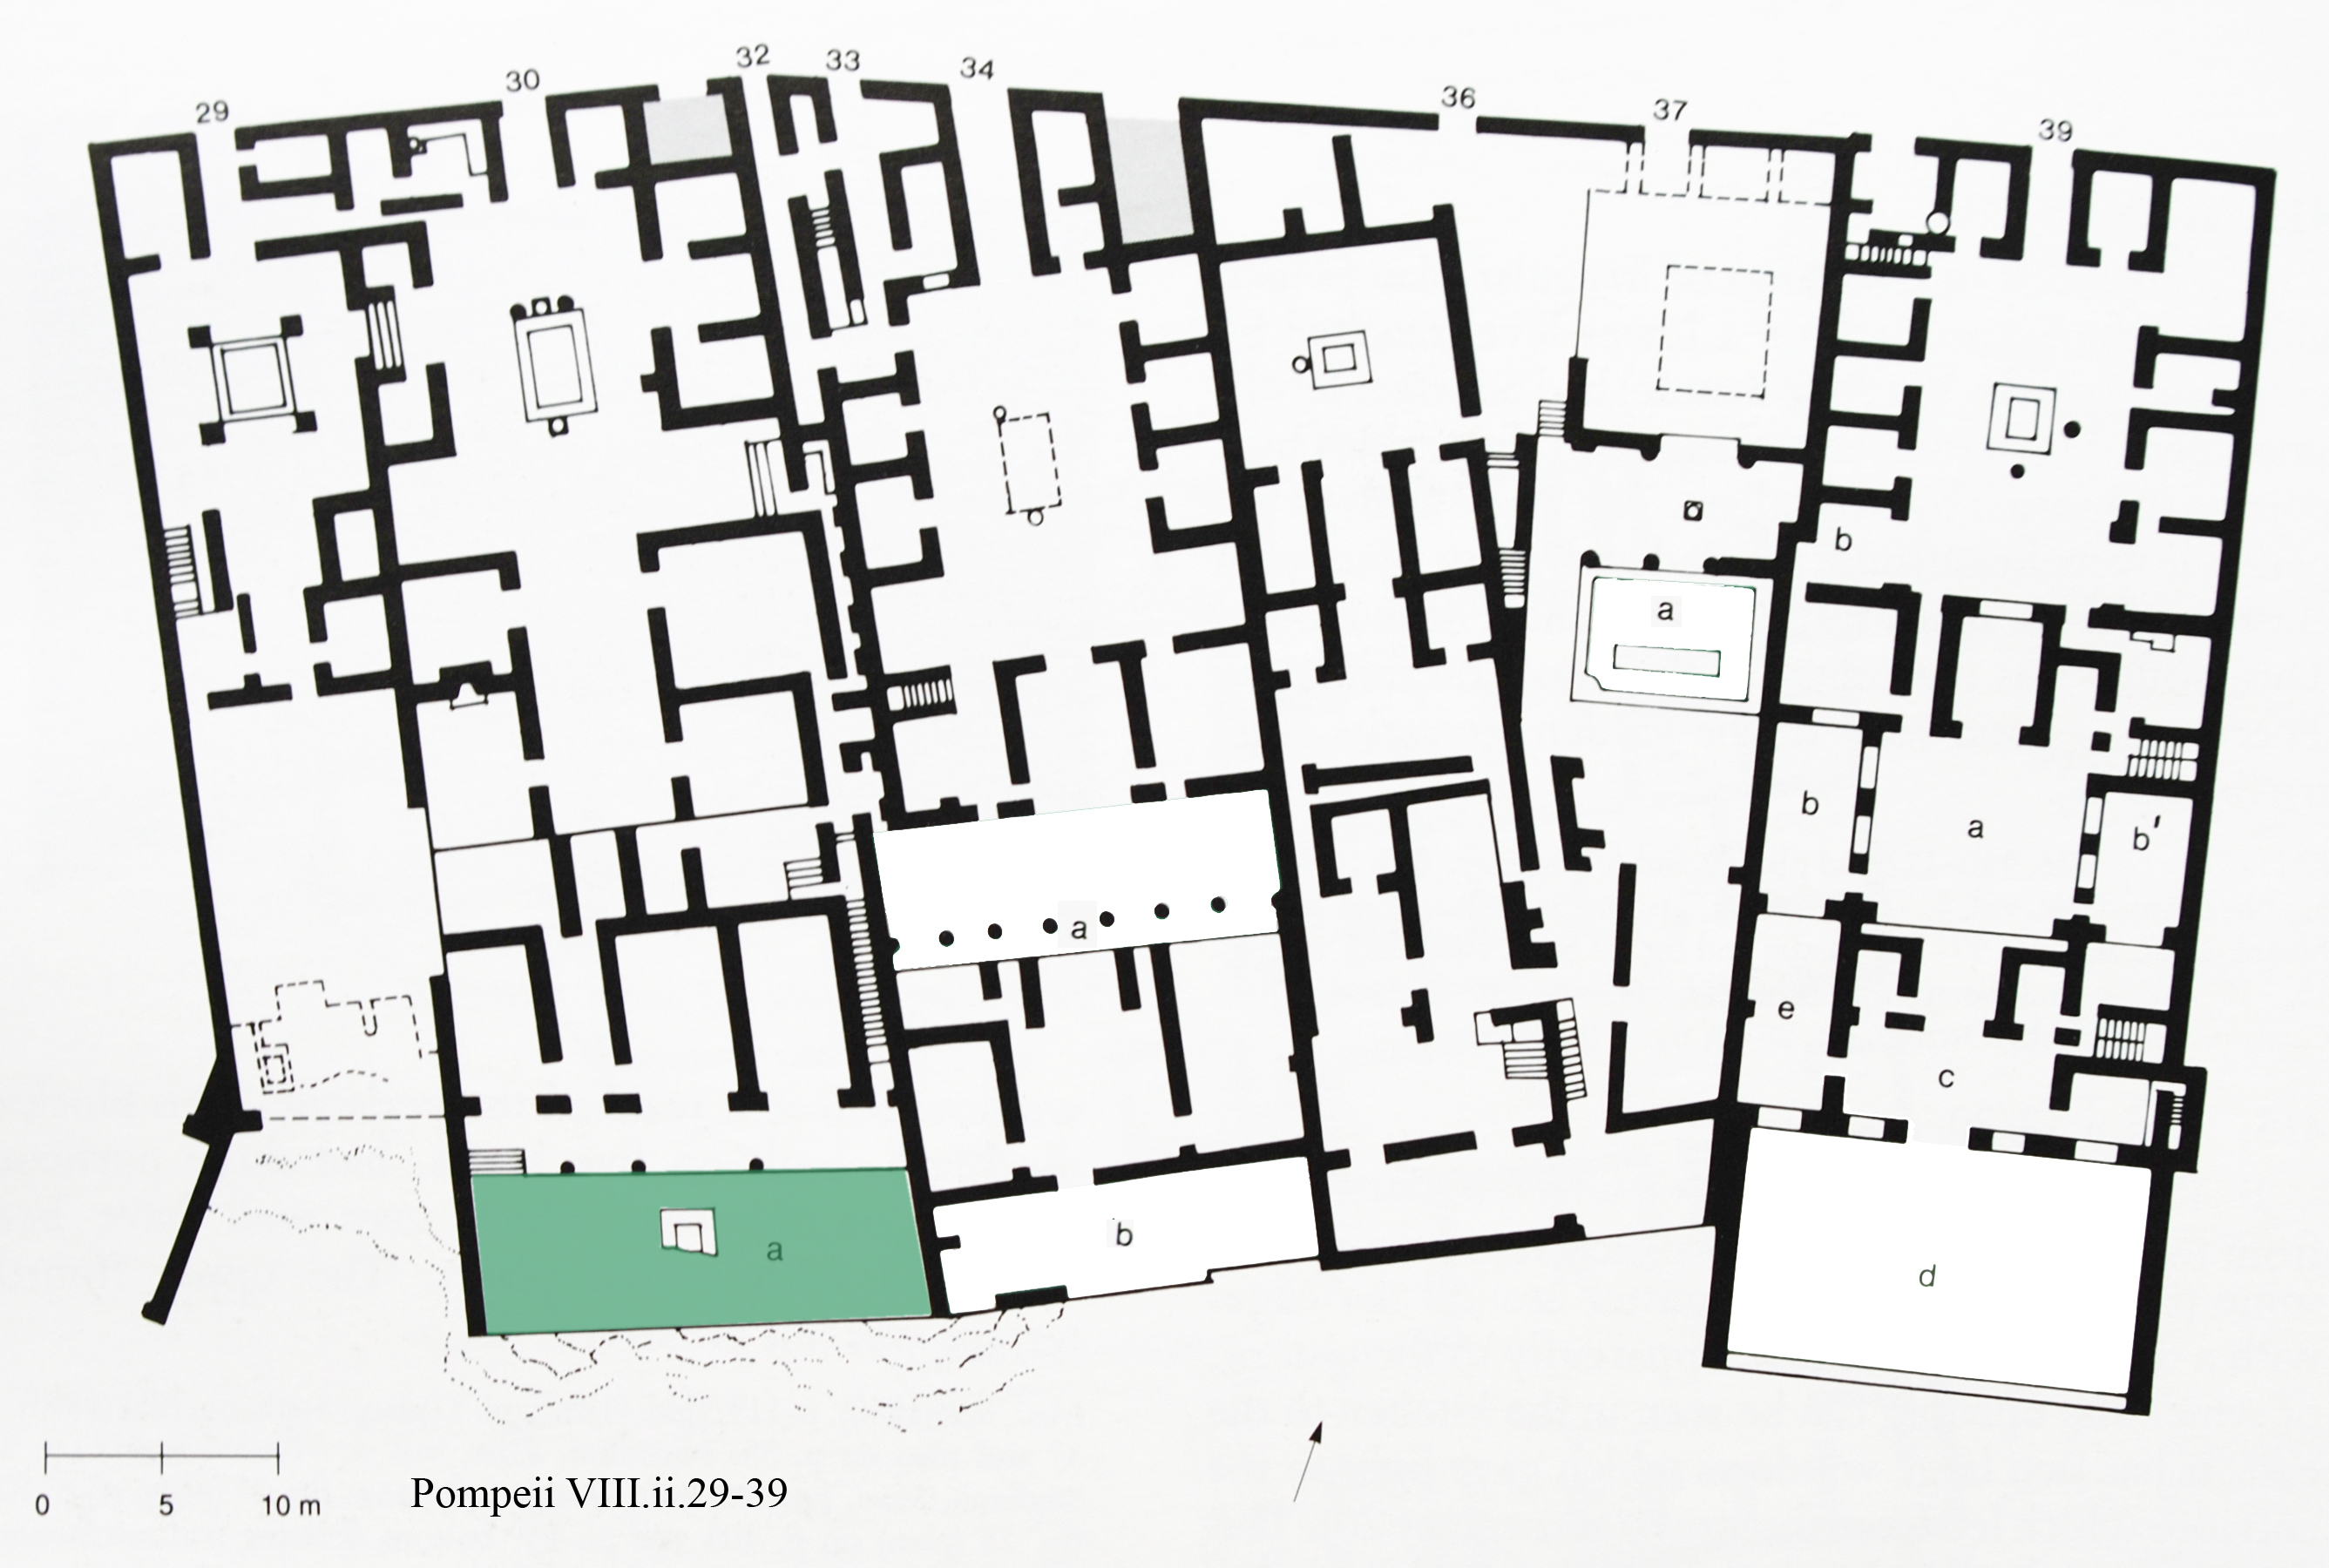 Plan of the Pompeii Region VIII, Insula II, 29-39